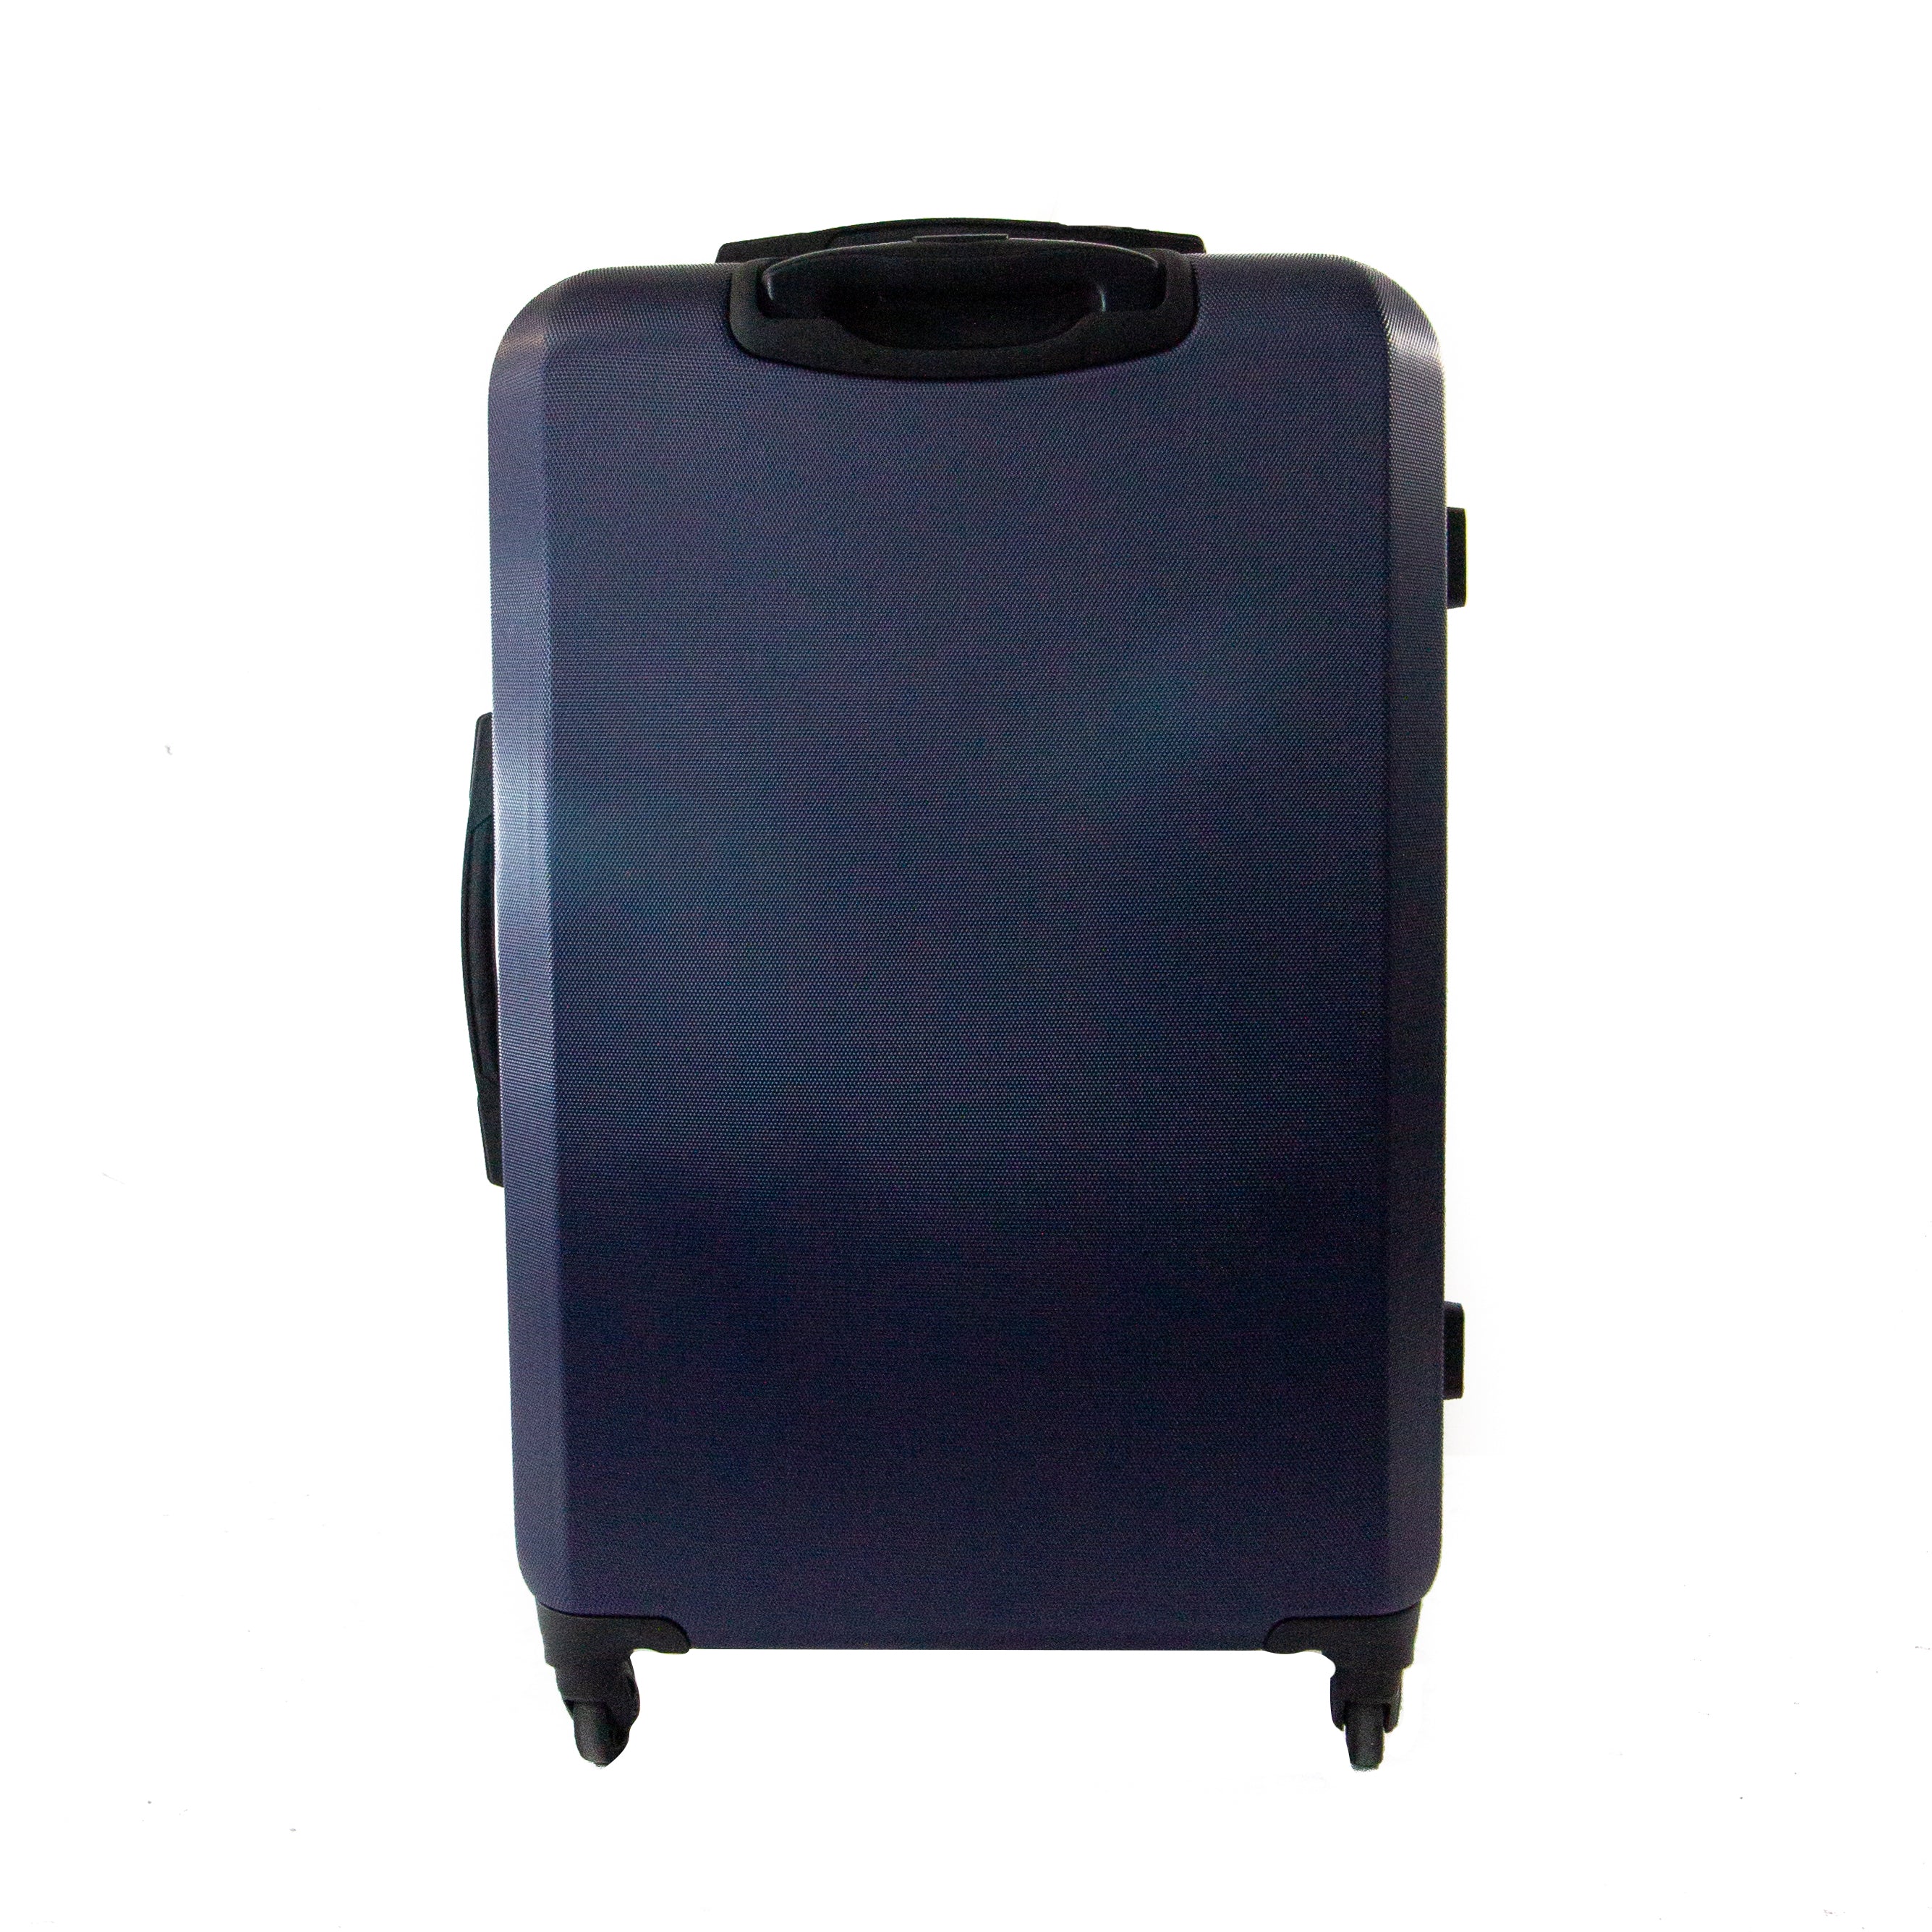 Roberto Cavalli Molded Monogram Luggage Set in Black